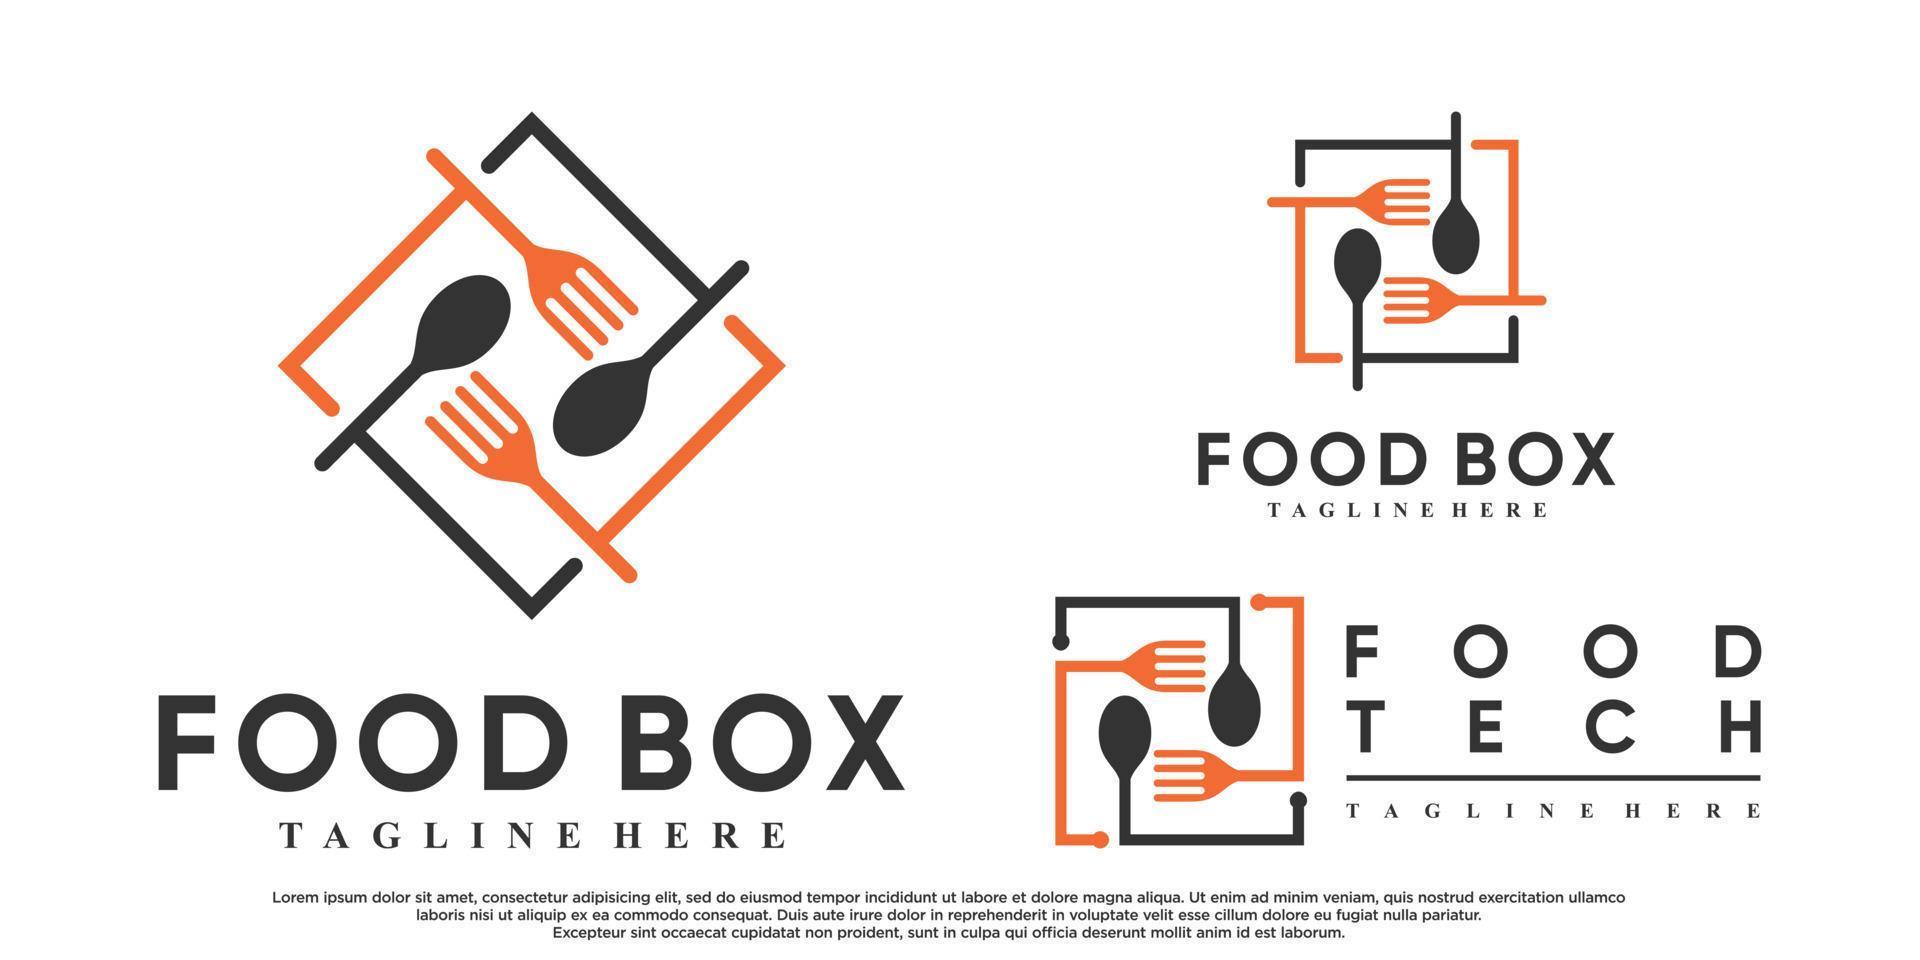 Set von Food-Box-Logo-Design mit kreativem Konzept-Premium-Vektor vektor